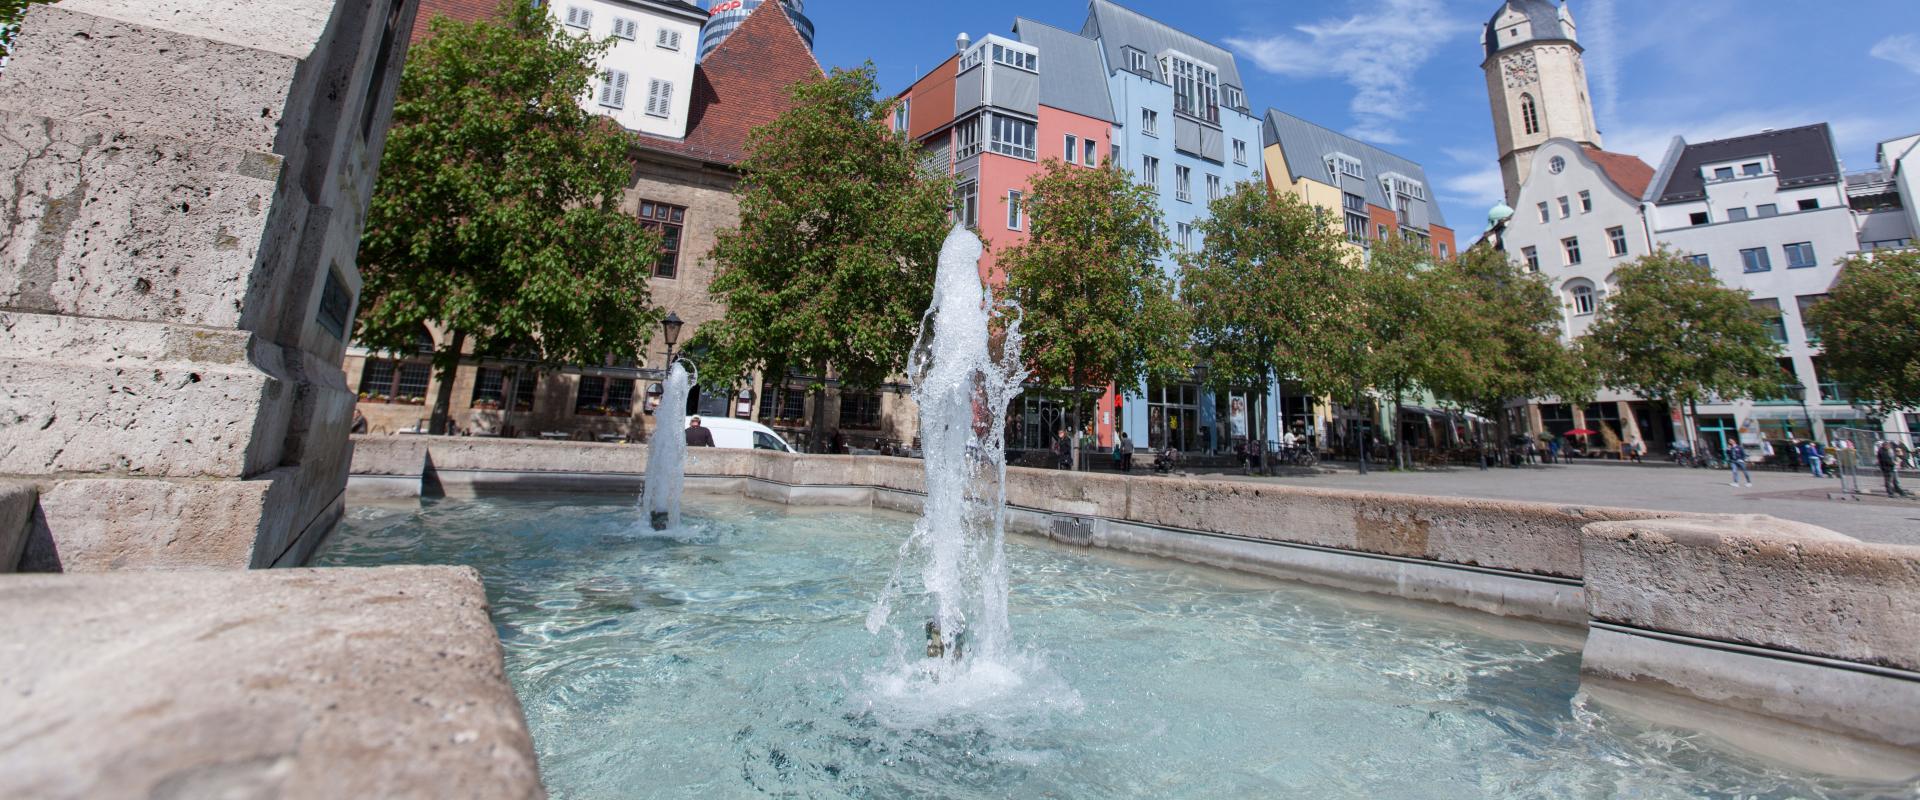 Bismarck Fountain on the Jena market square